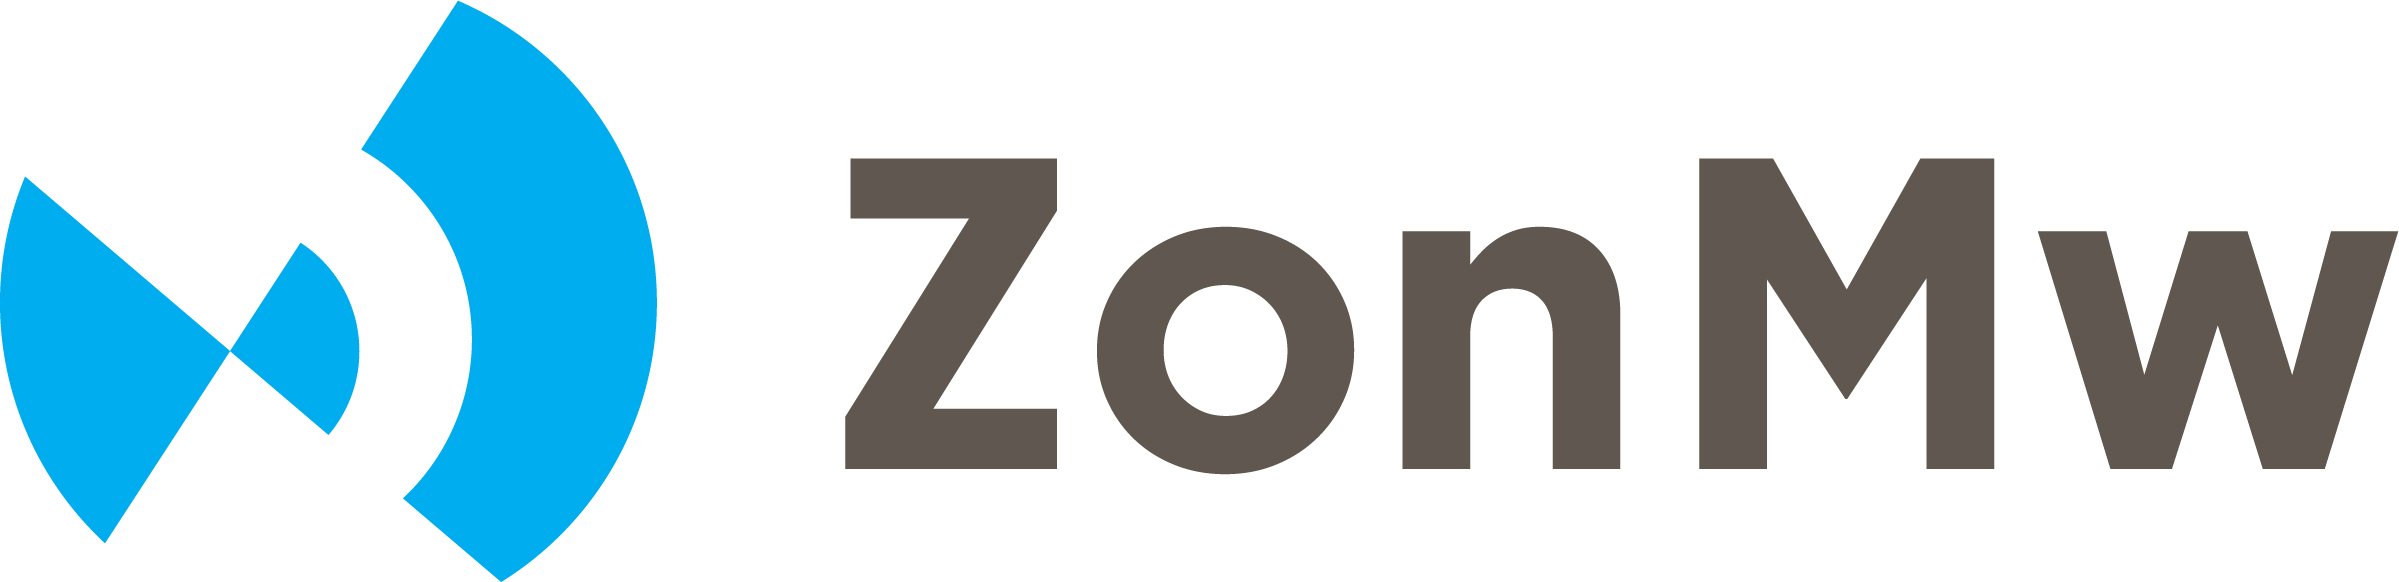 ZonMw_logo-3_RGB_def.jpg